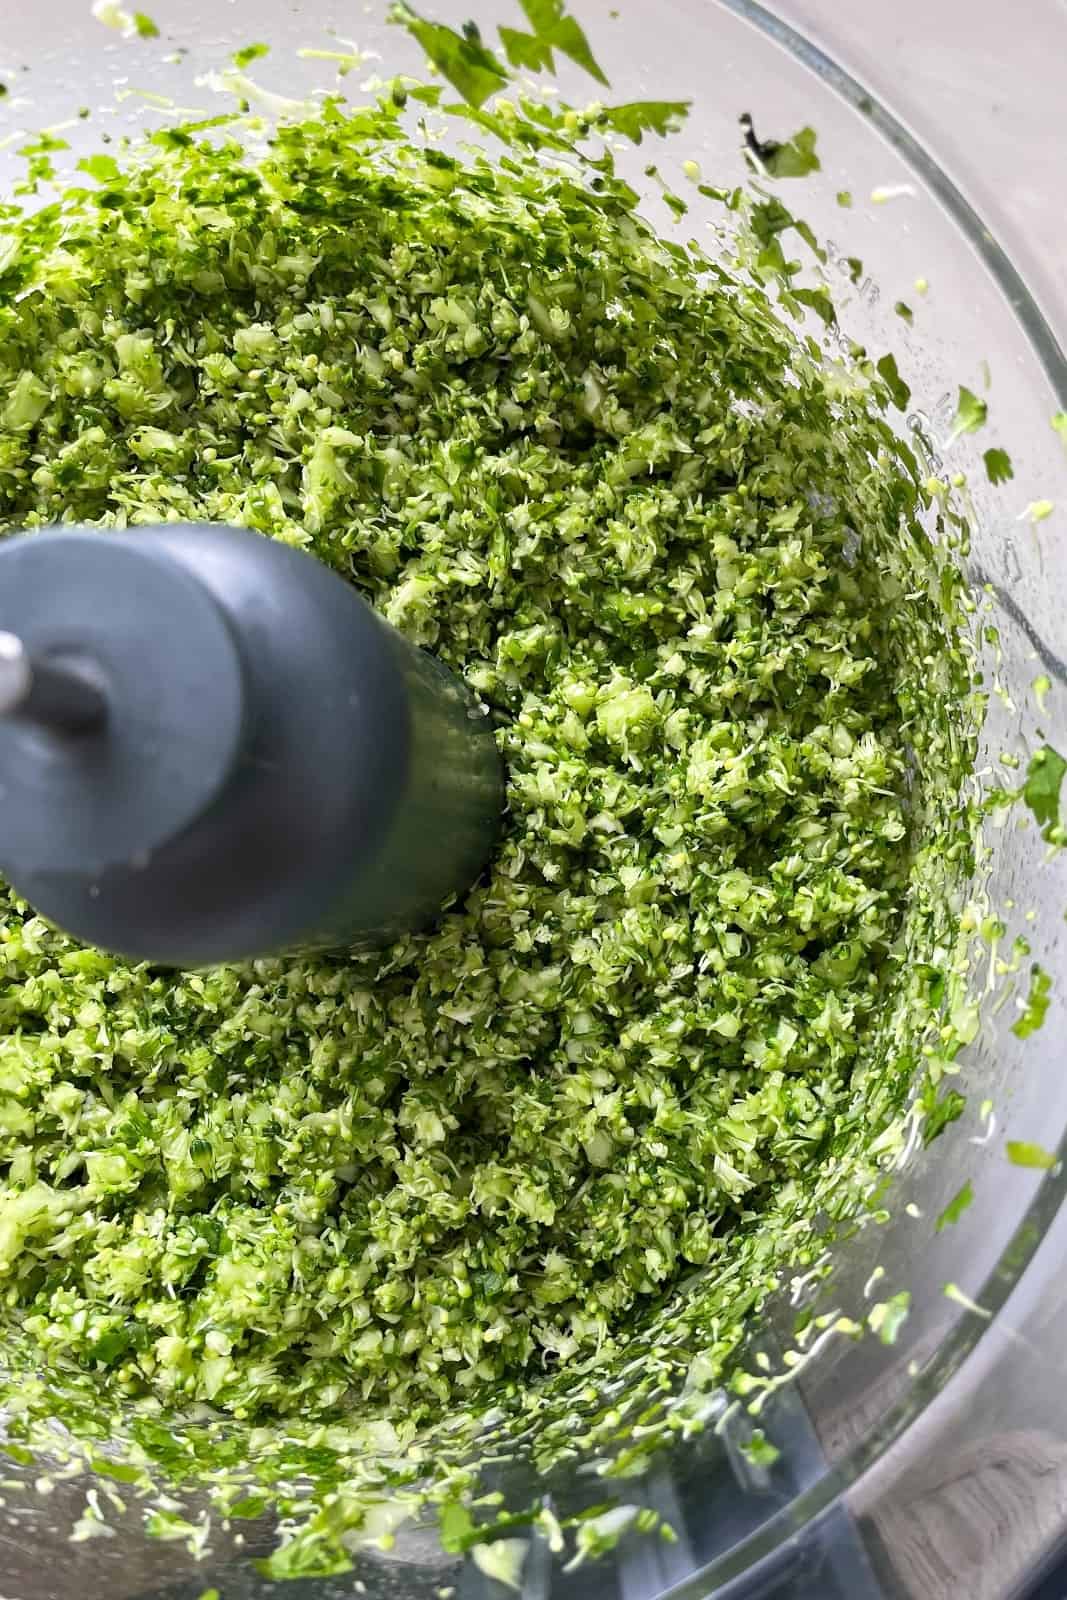 Mix the broccoli and coriander to form broccoli rice